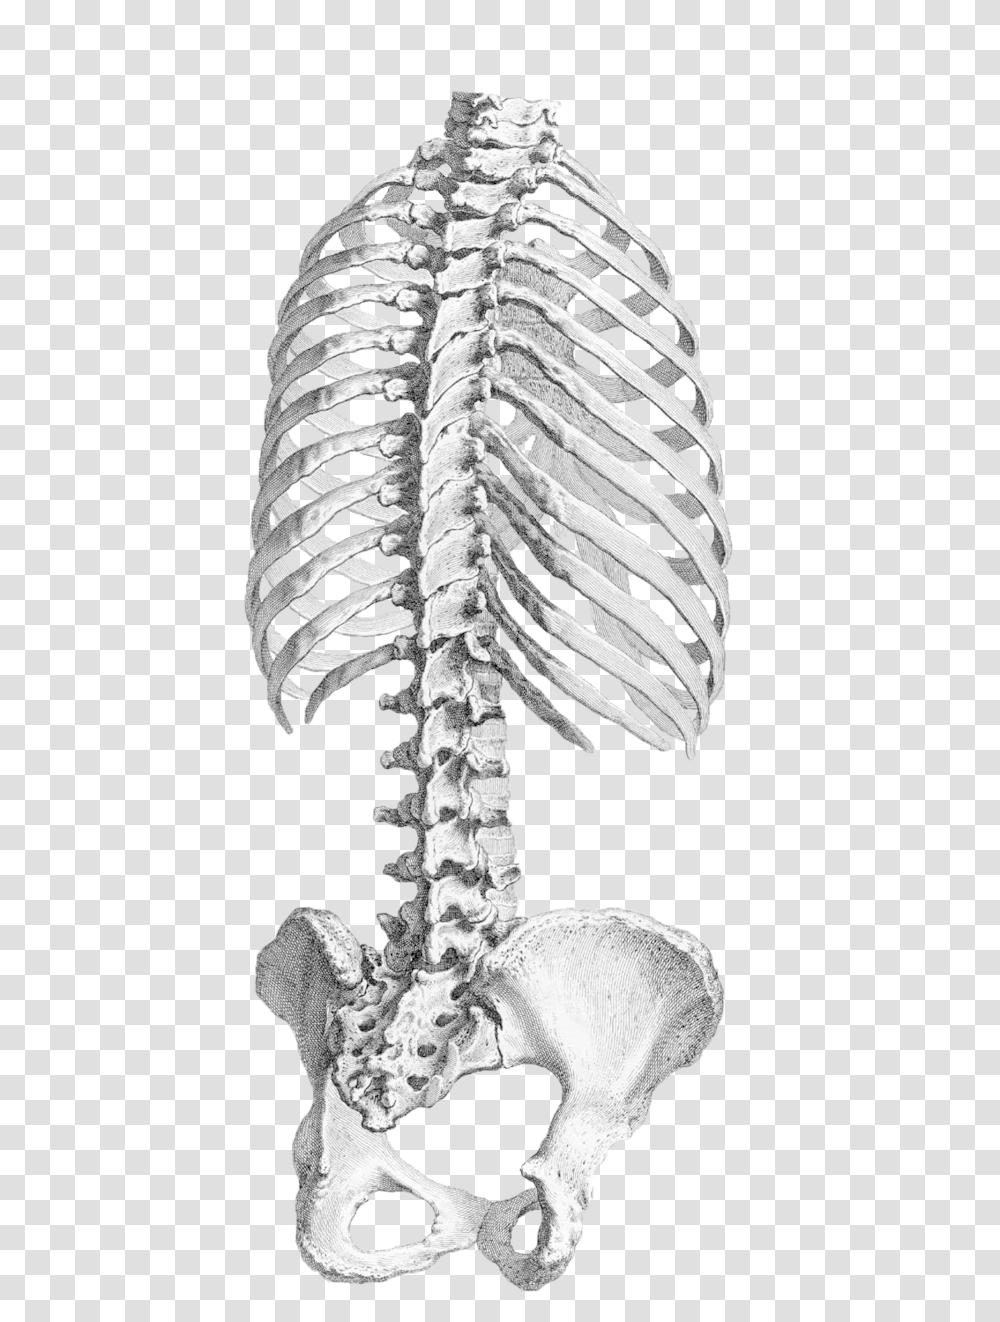 Human Anatomy Rib Cage Vertebral Column Pelvis Rib Cage, Skeleton Transparent Png